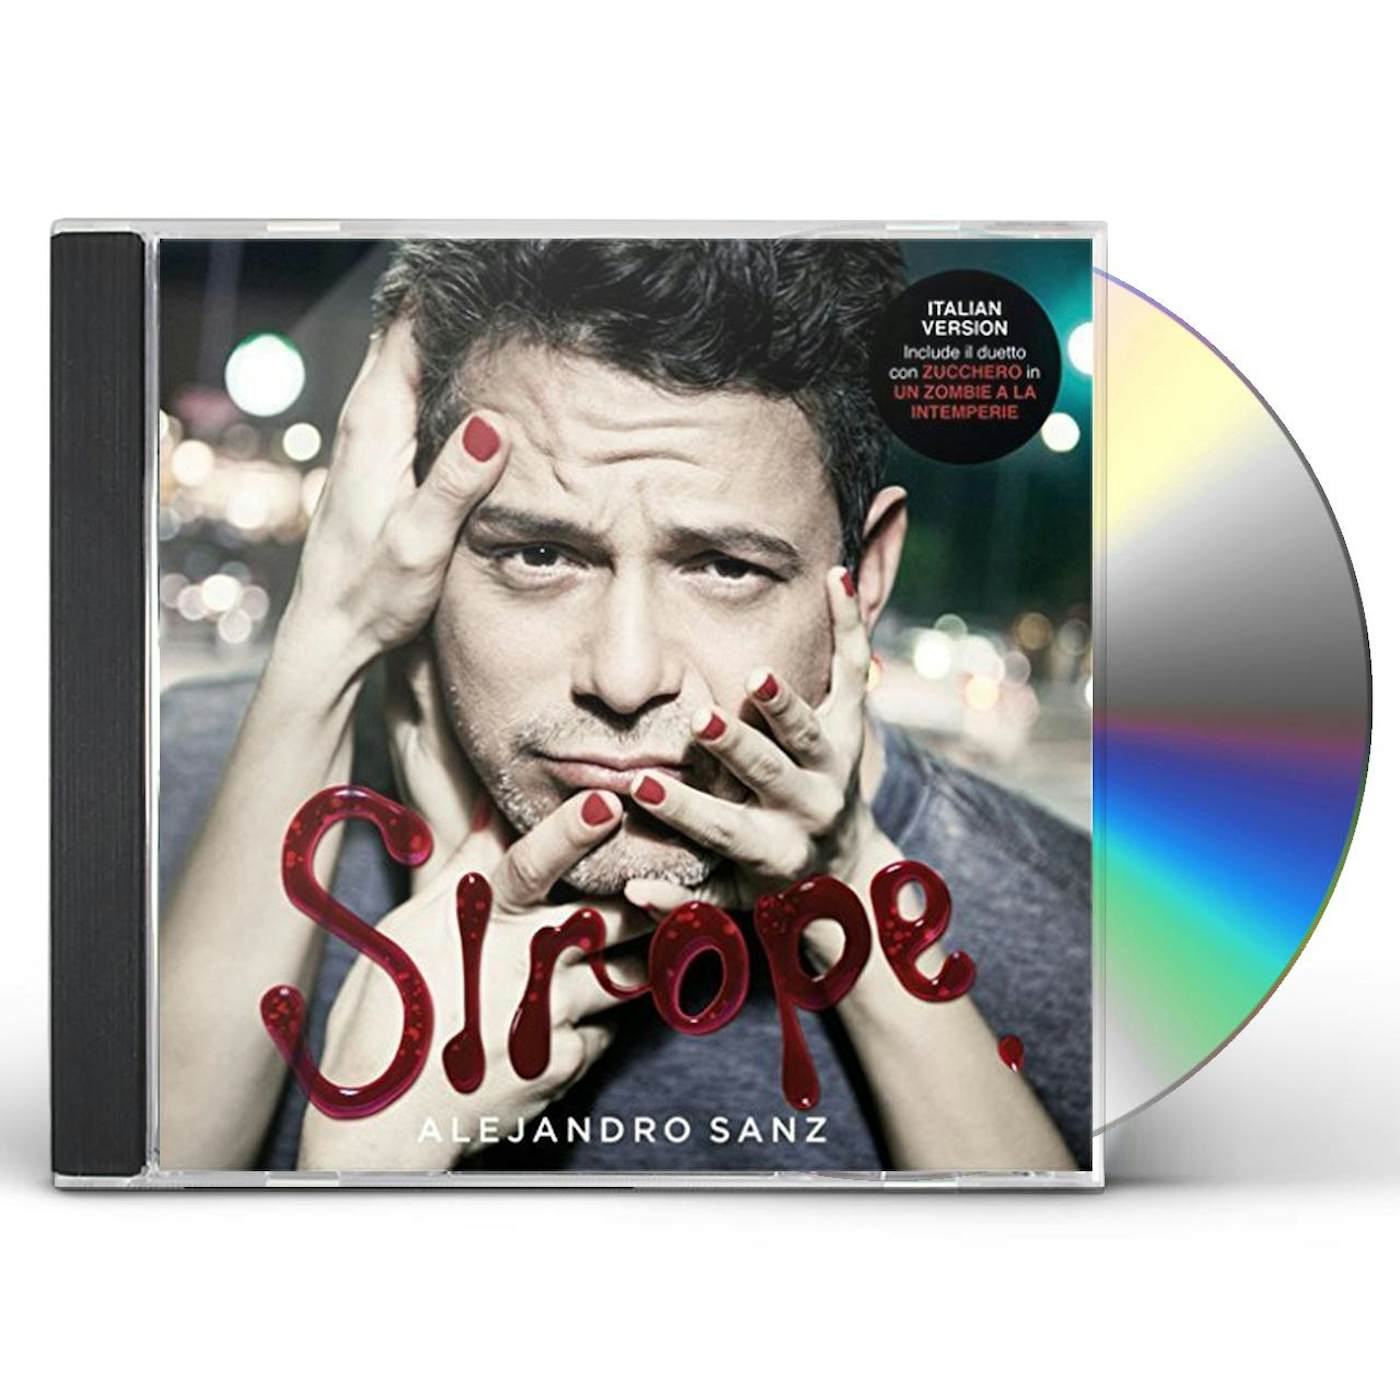 Alejandro Sanz SIROPE: ITALIAN VERSION CD